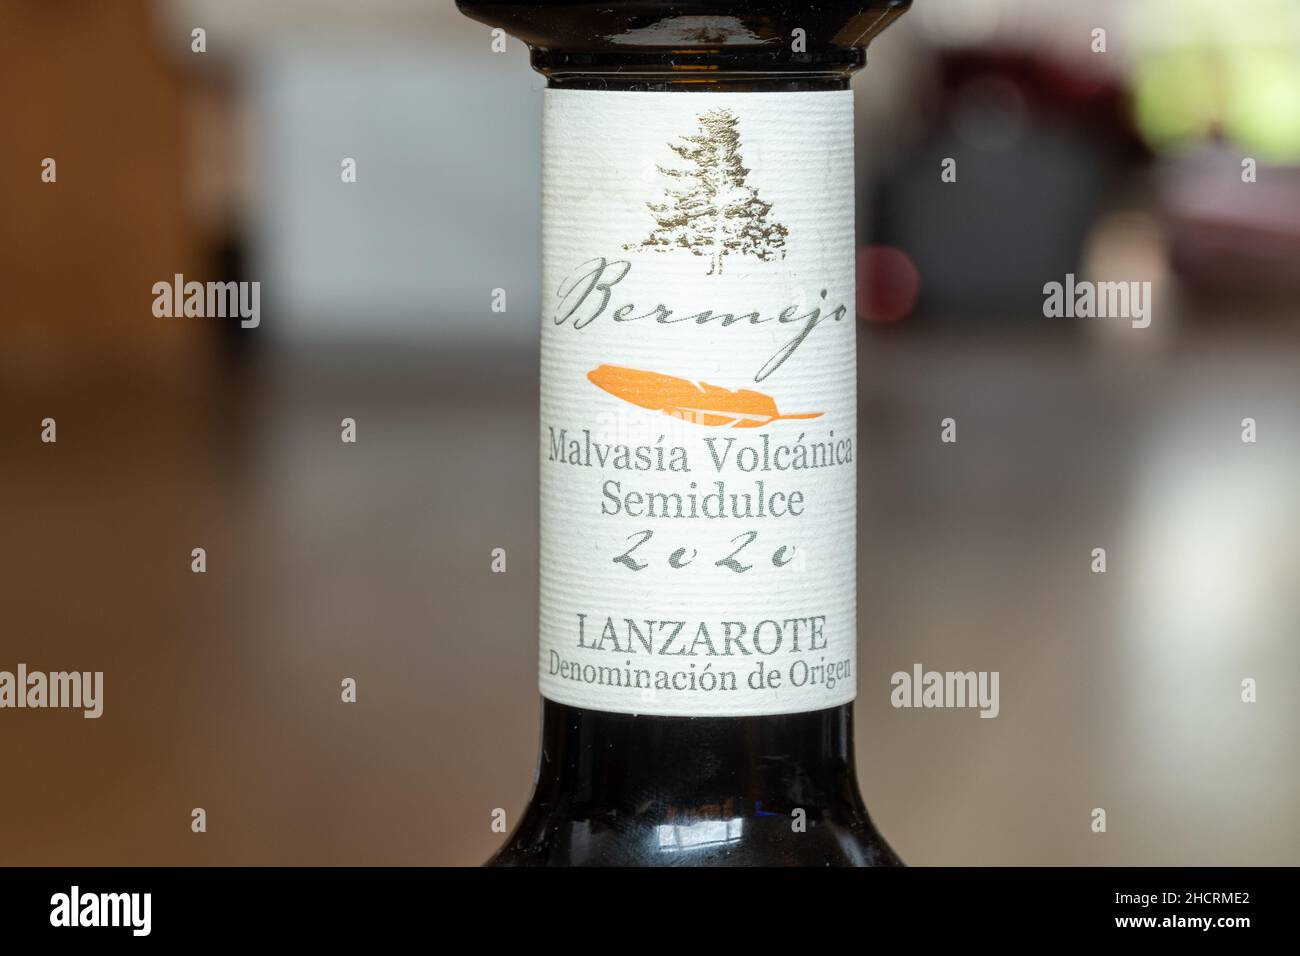 Label on bottle of Bermejo Malvasia Volcanica Semidulce wine, a dessert wine from Lanzarote, Spain Stock Photo